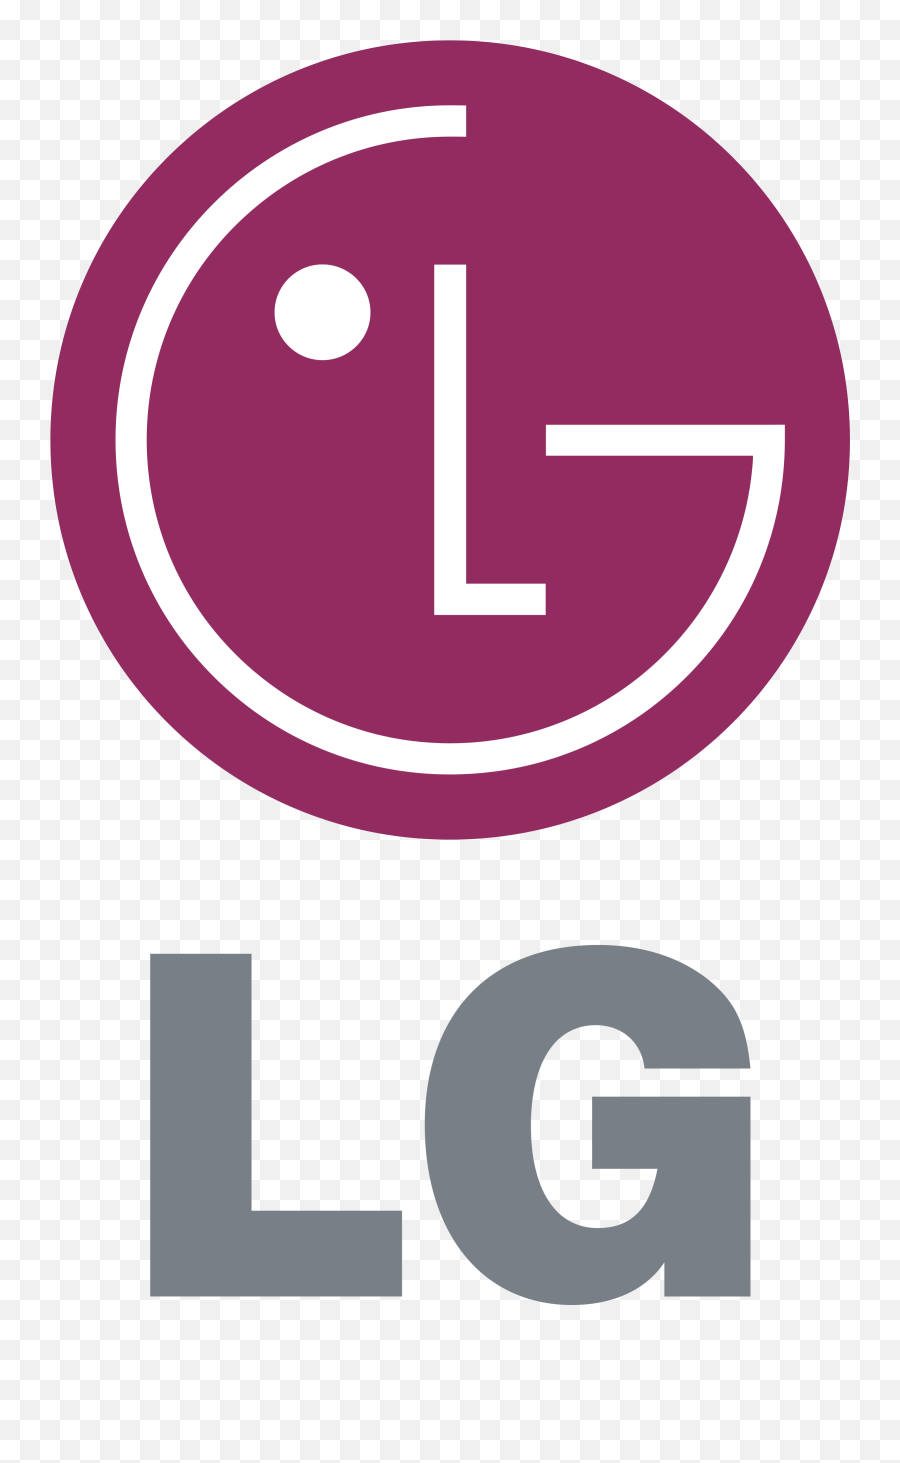 Download Lg Logo Png Transparent - Lg,Lg Logo Png